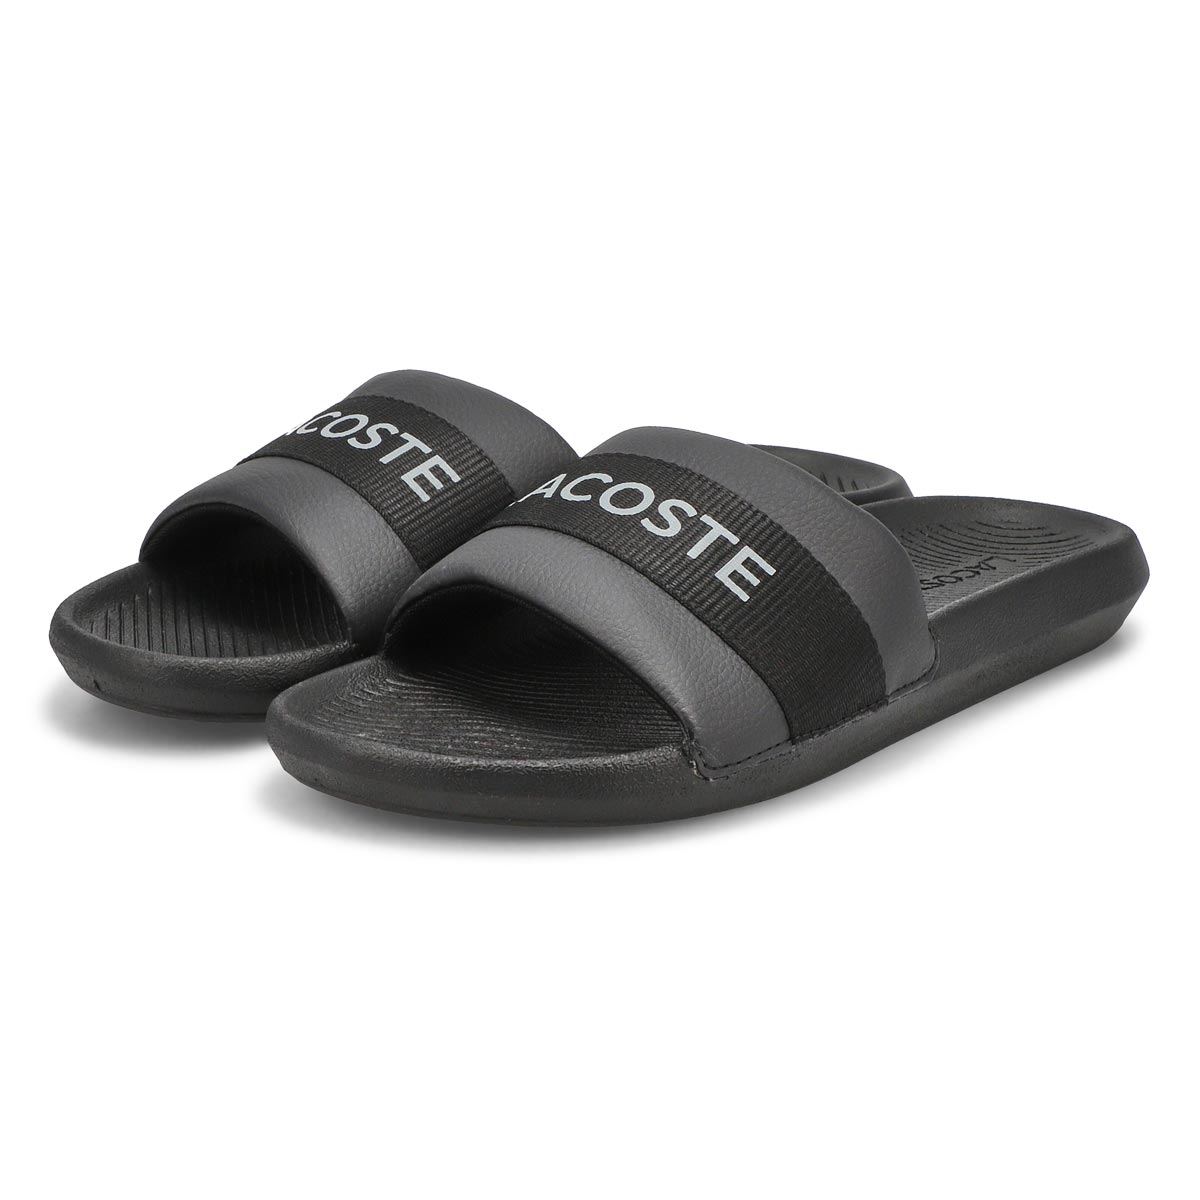 Men's Croco Slide Sandal - Black/Black